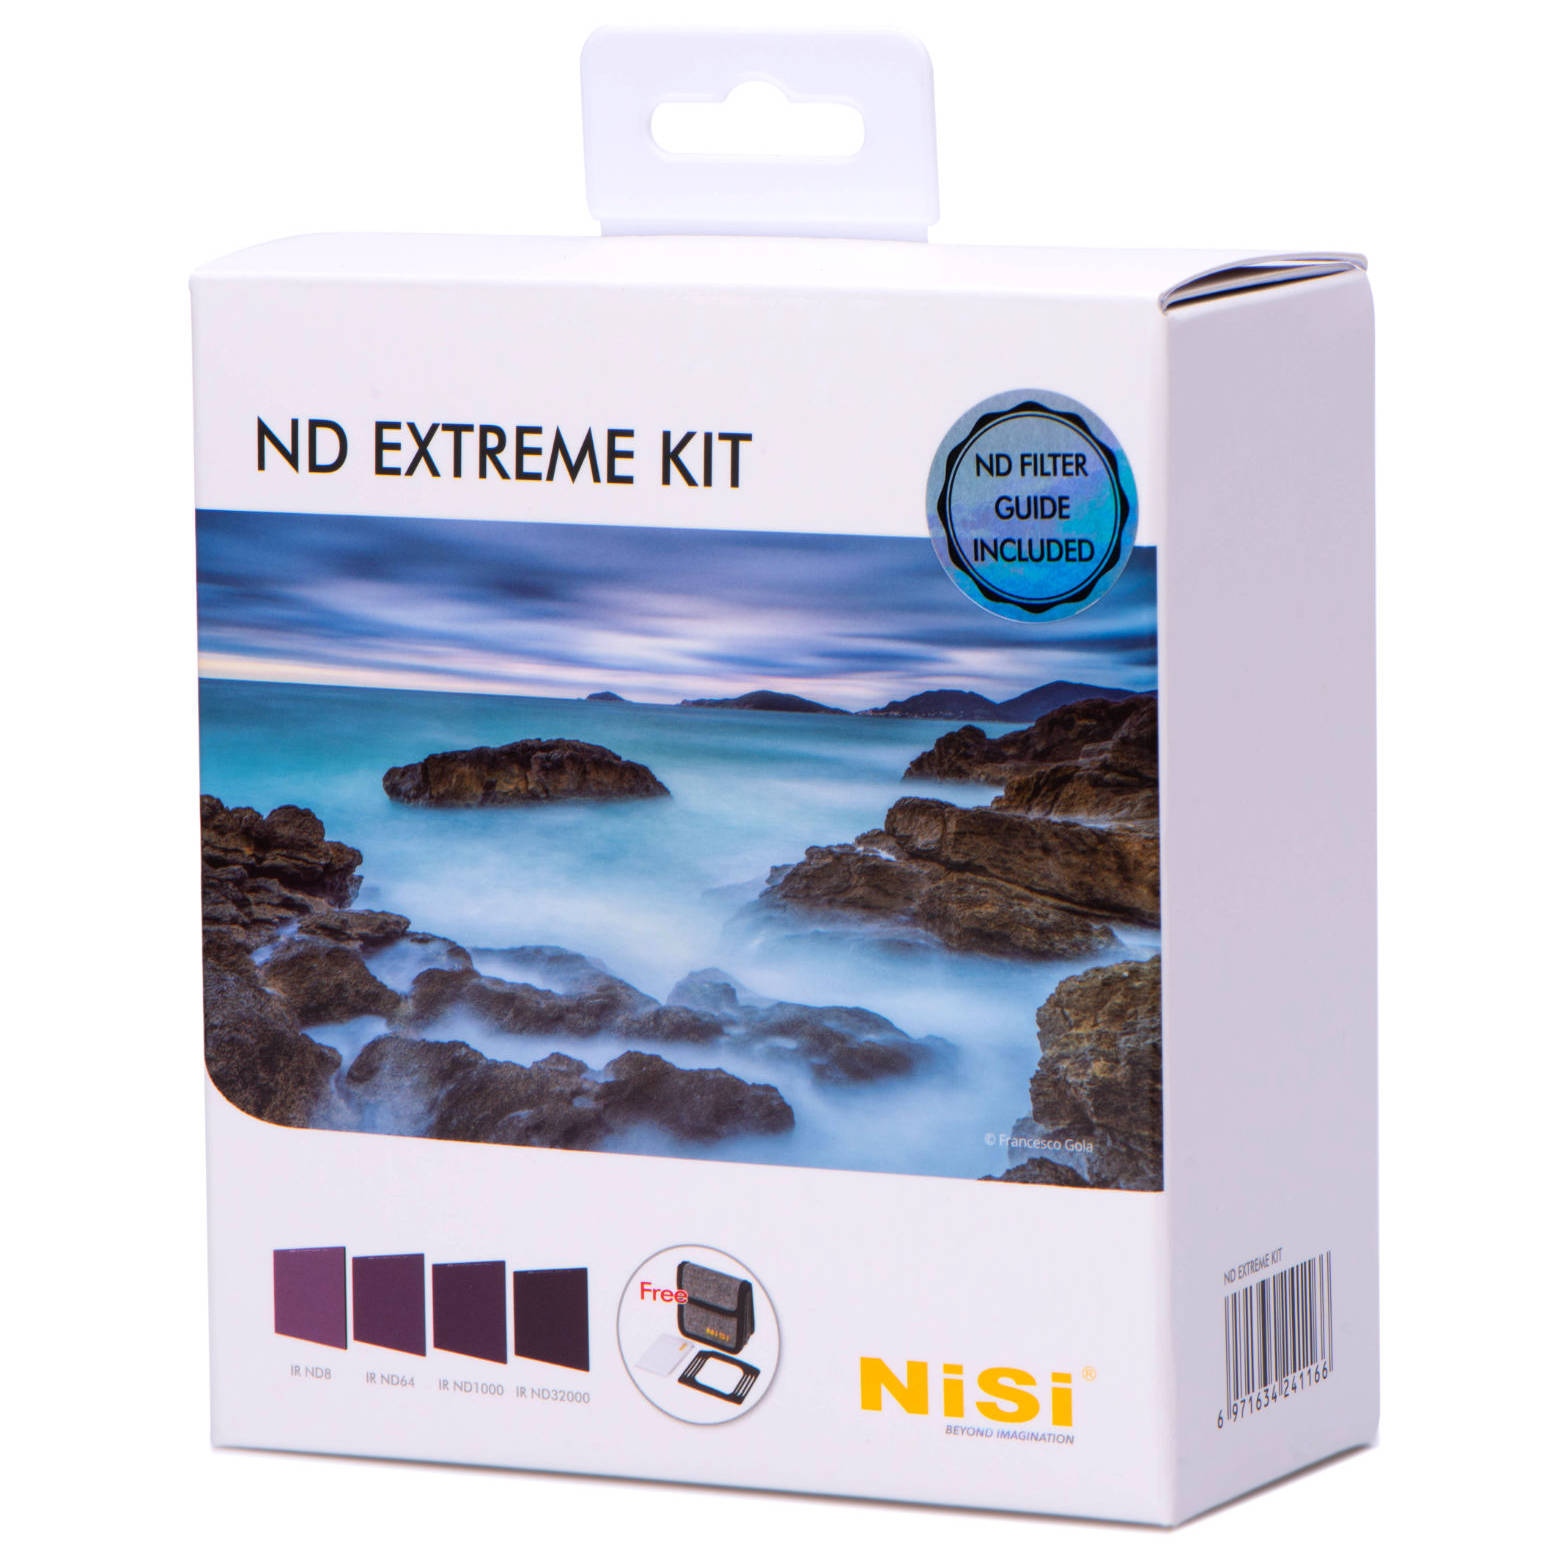 ND Extreme Kit